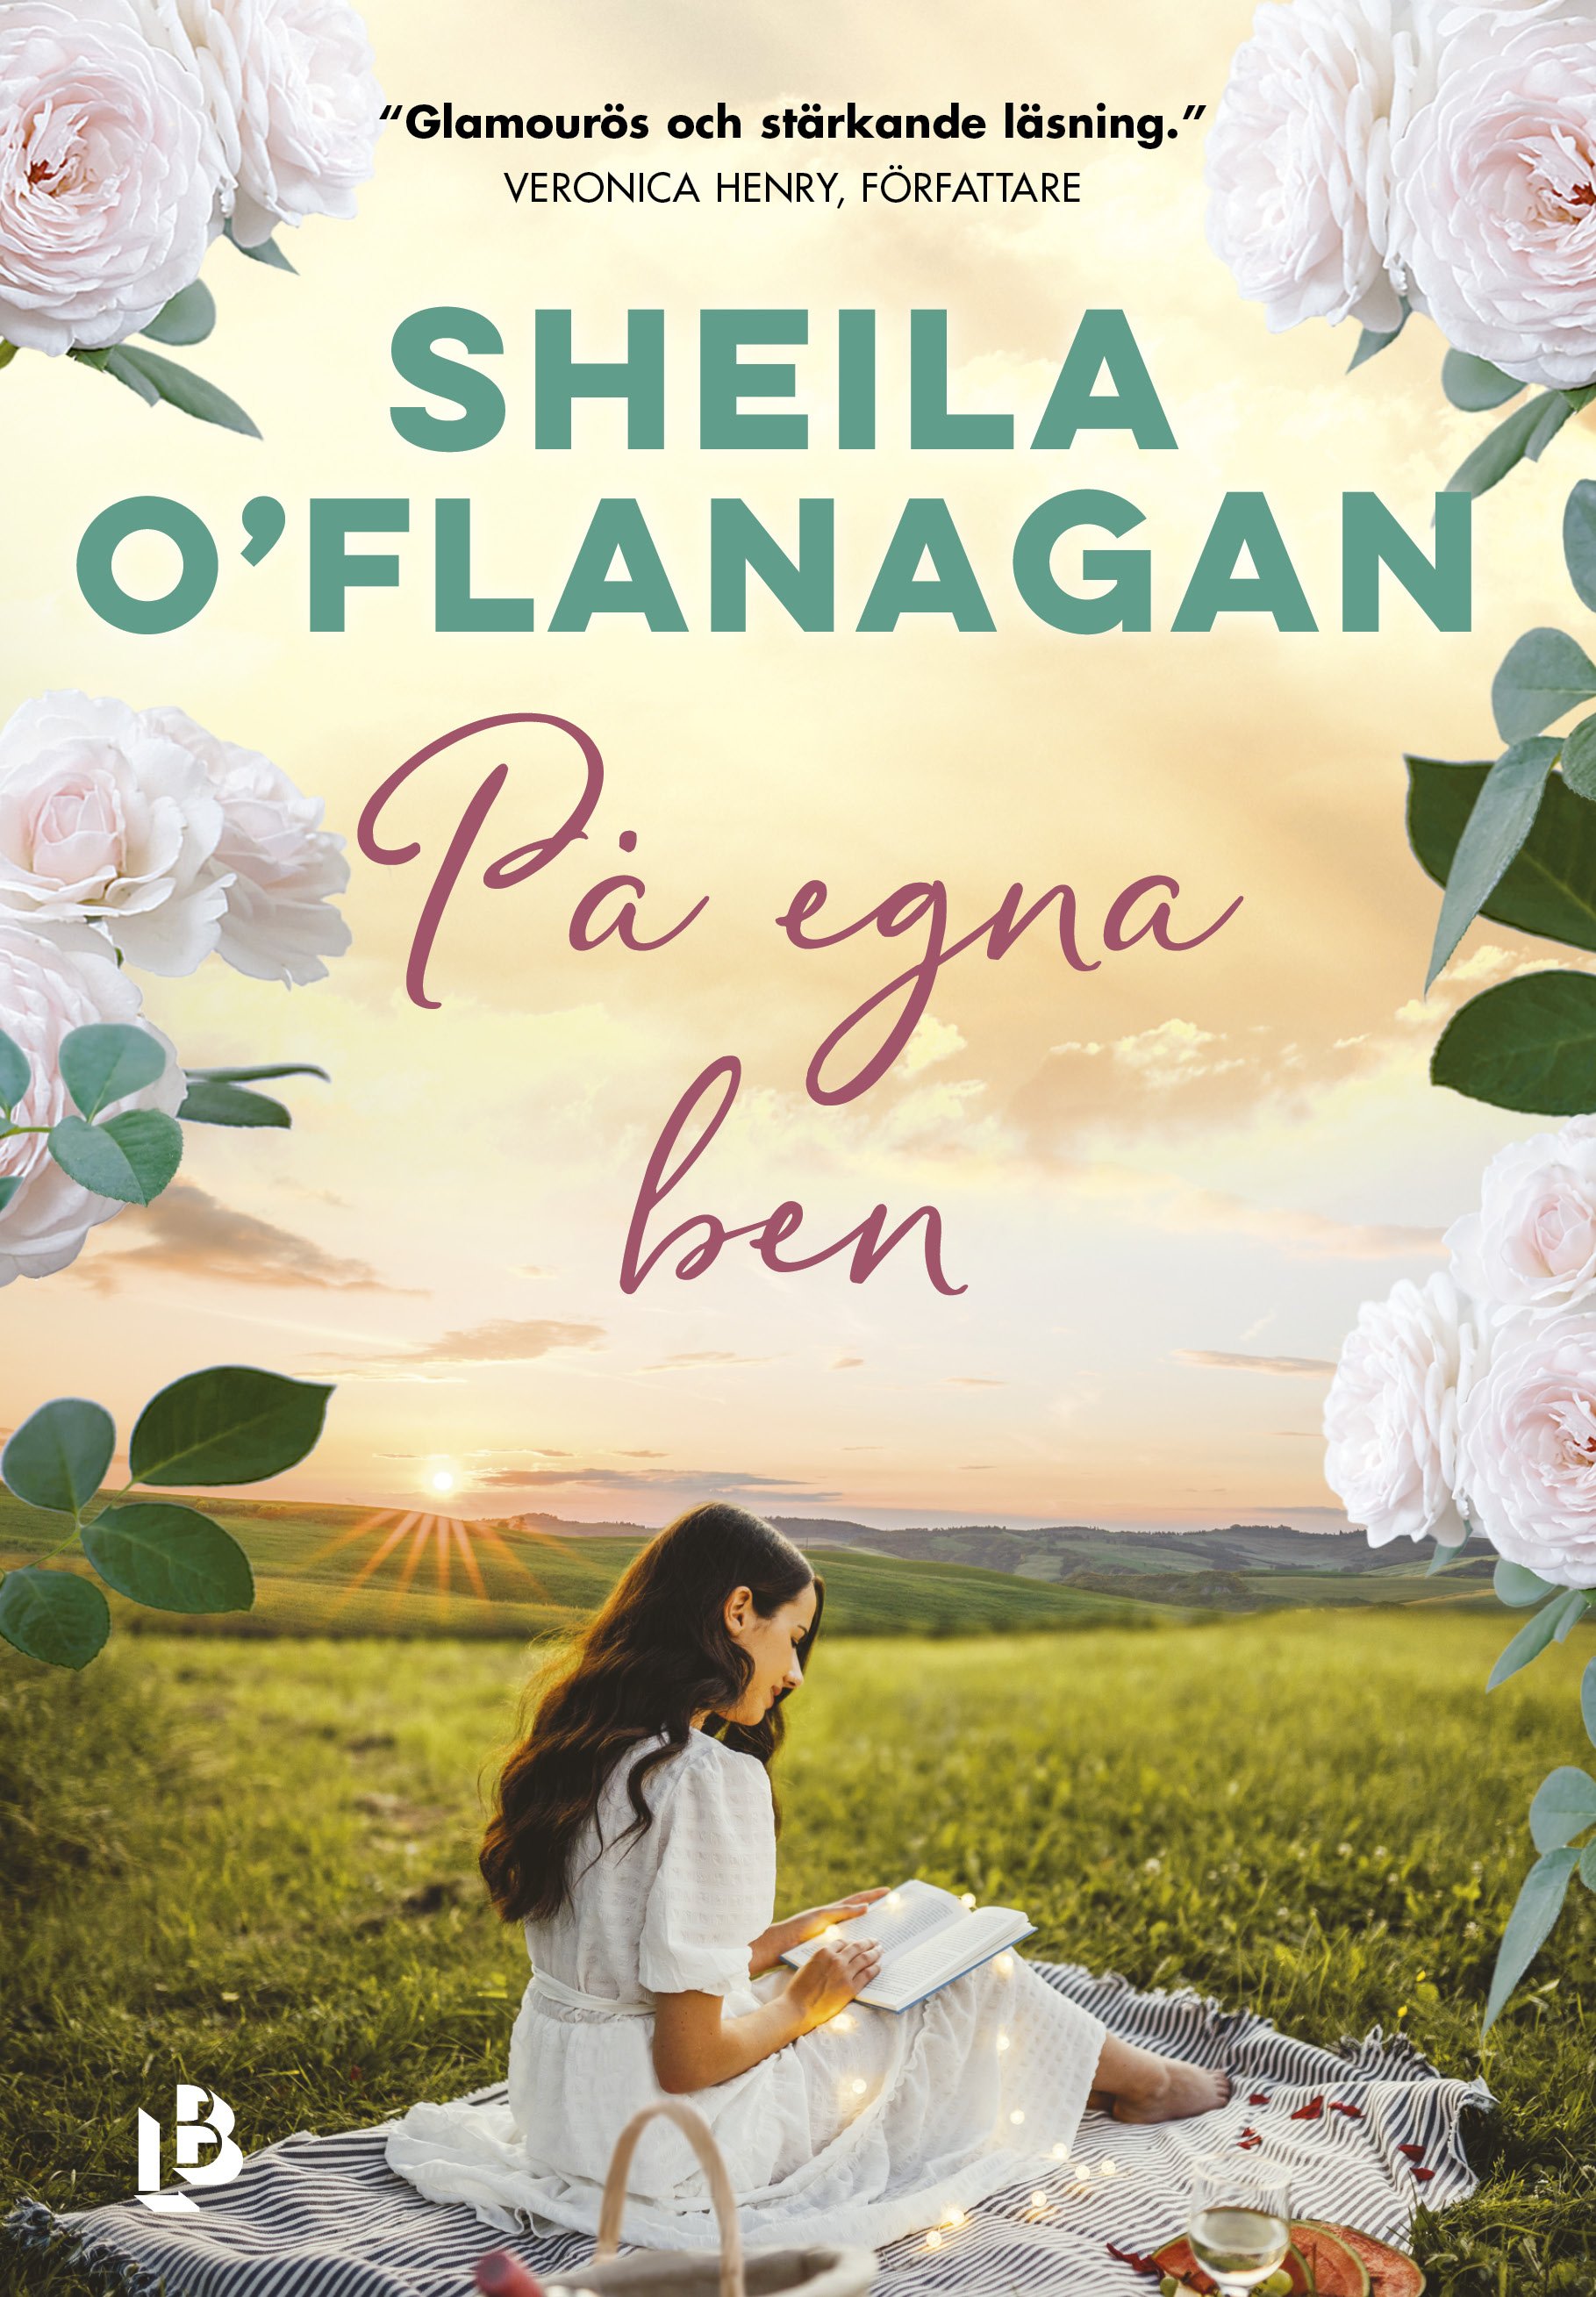 THREE WEDDINGS AND A PROPOSAL - O'FLANAGAN, Sheila - SWEDEN, LB Forlag - FINAL cover.jpg